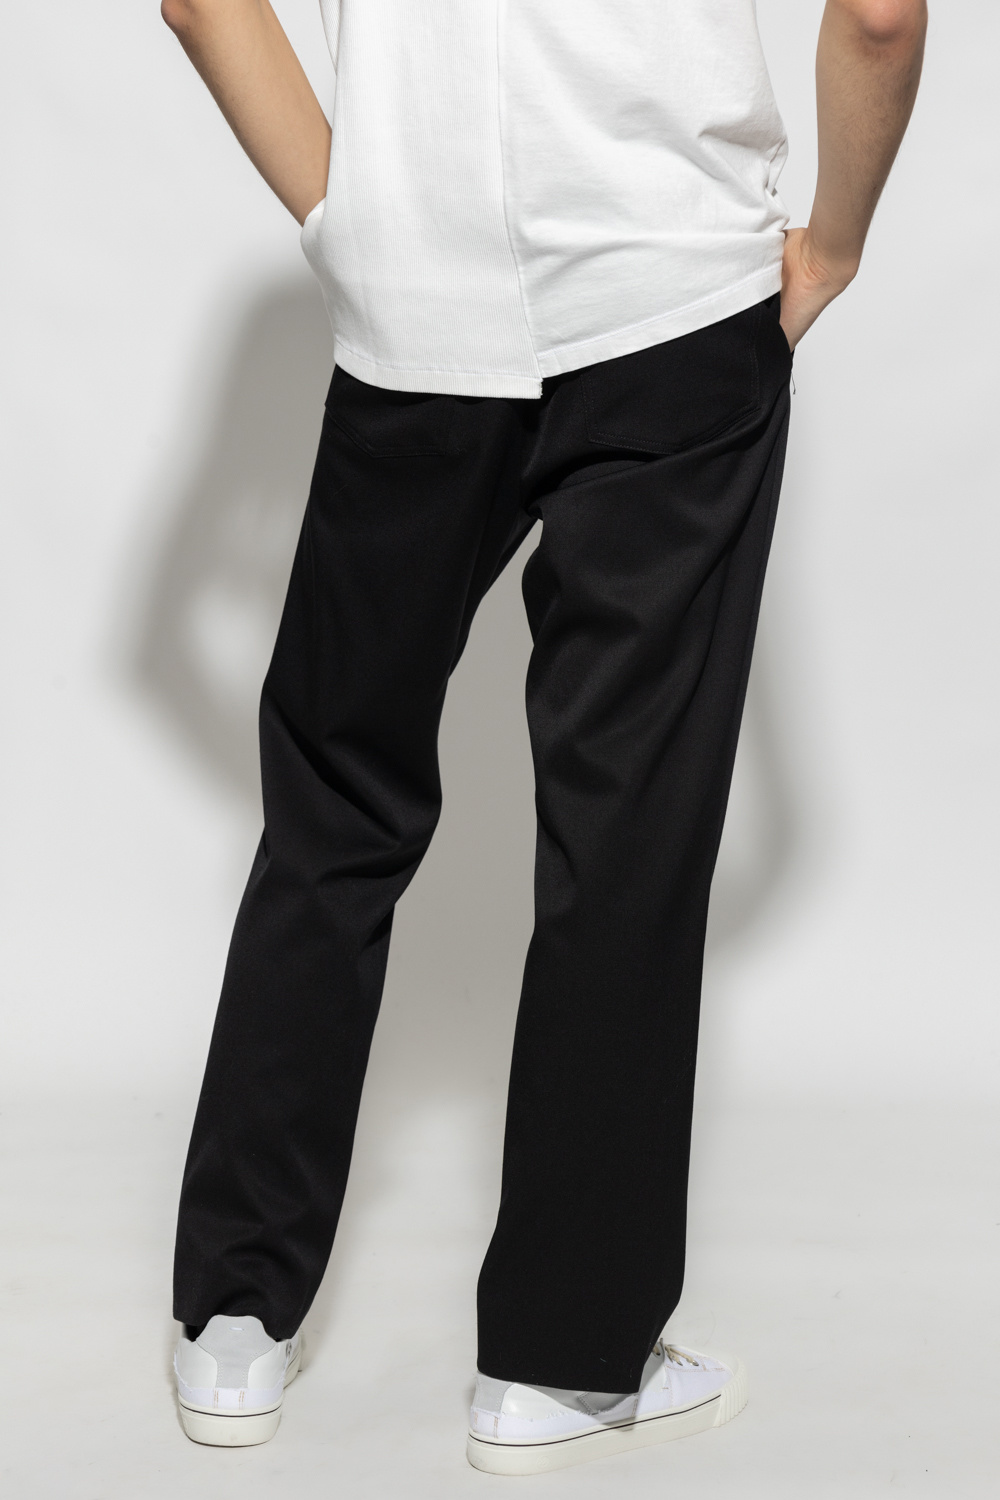 alexander mcqueen logo print track pants item frescobol trousers with straight legs